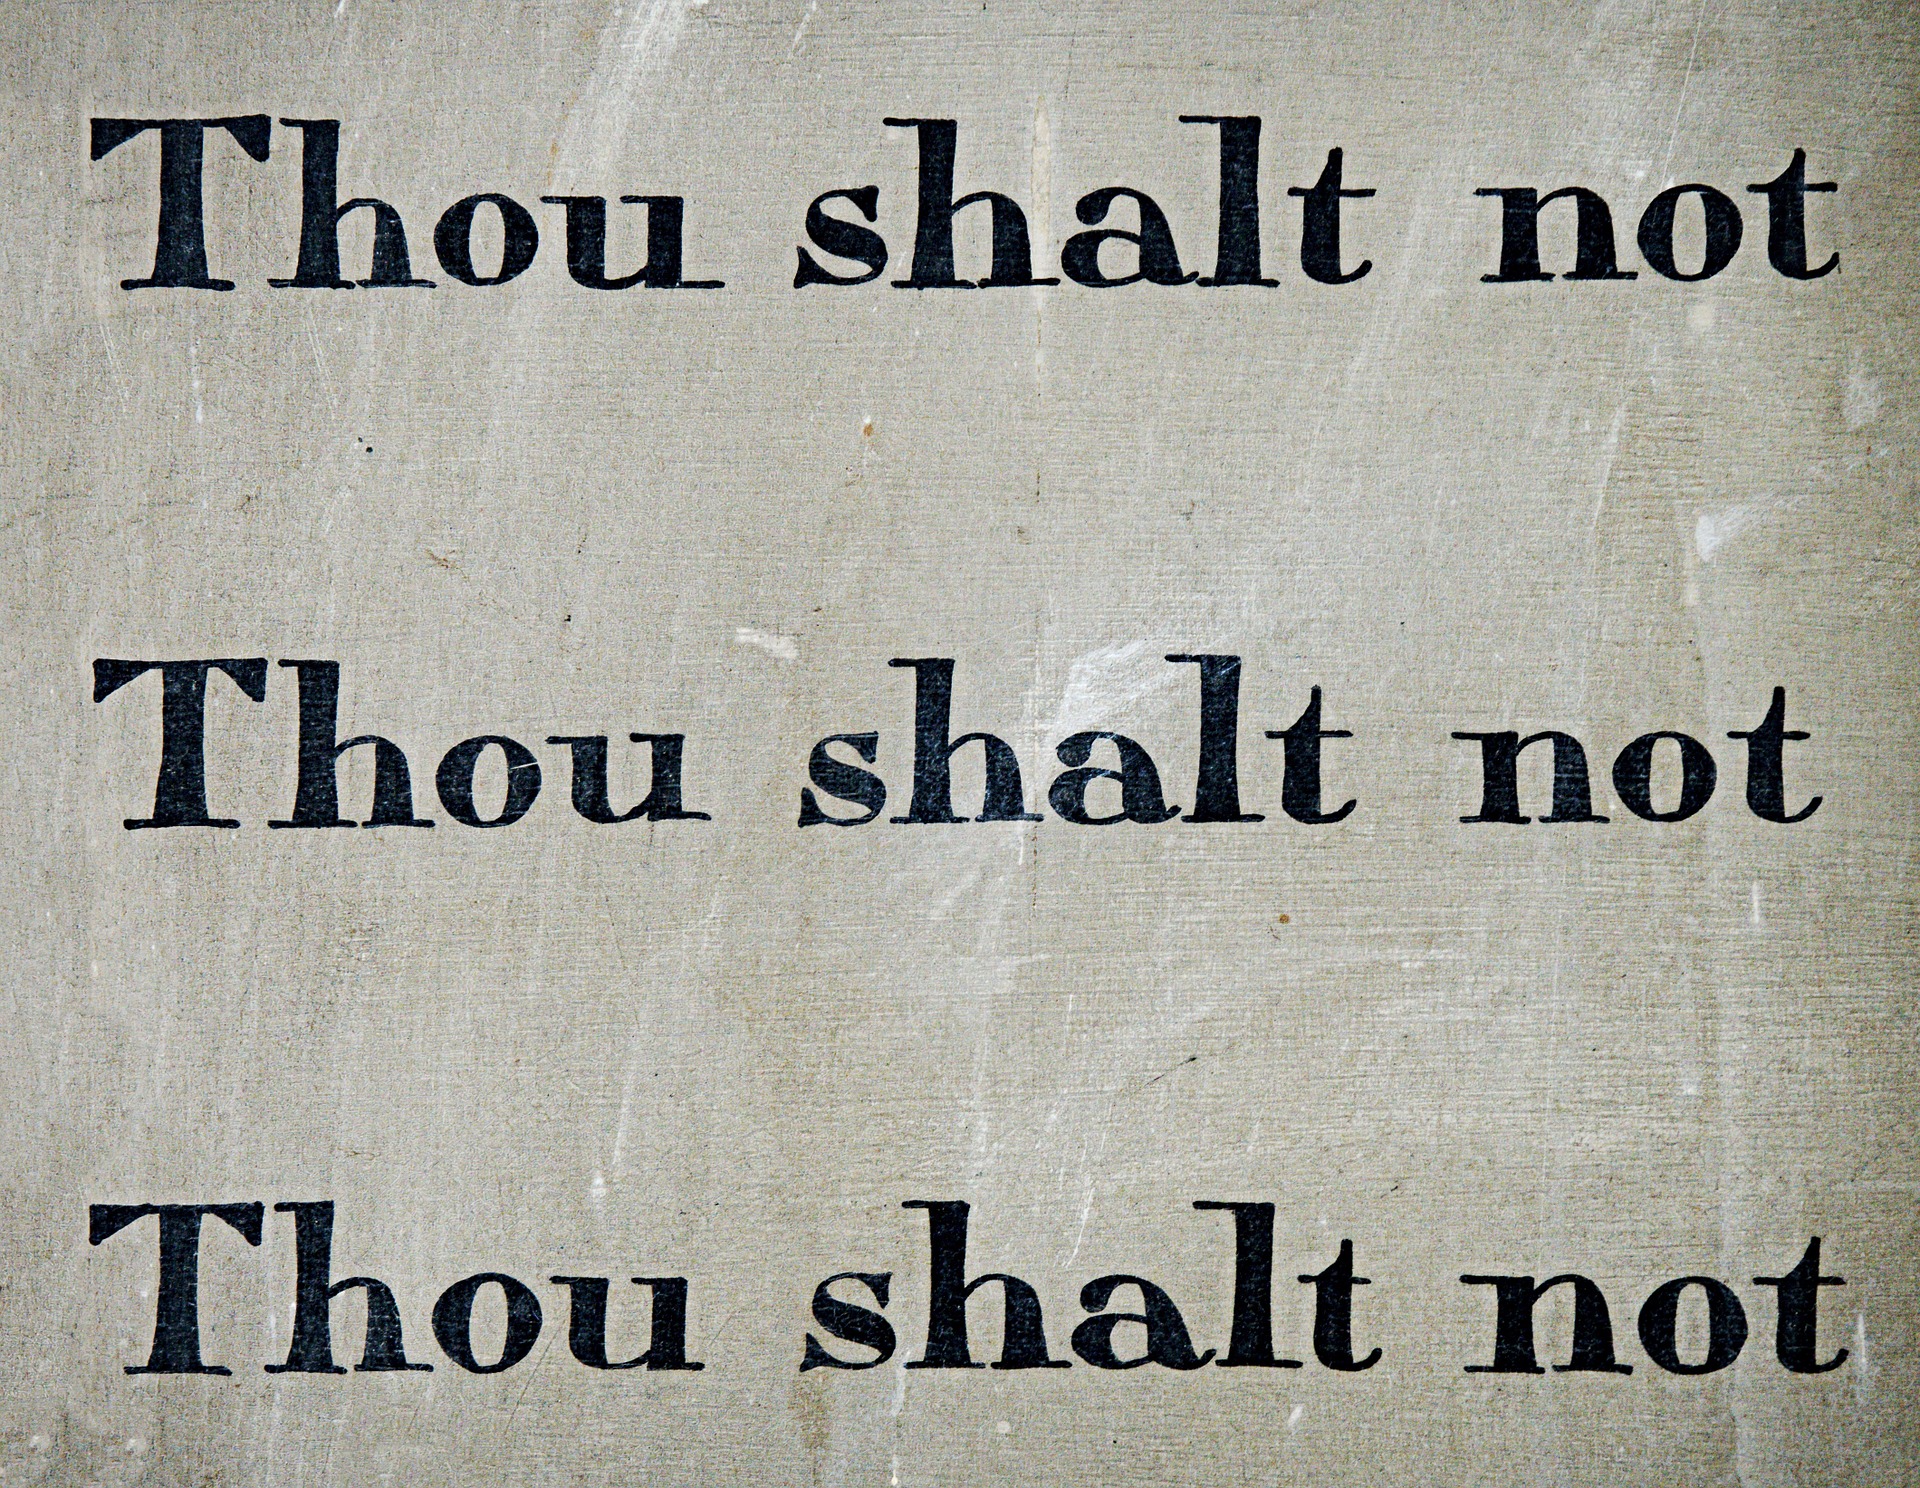 Thou shalt not - commandement - guilt - rules